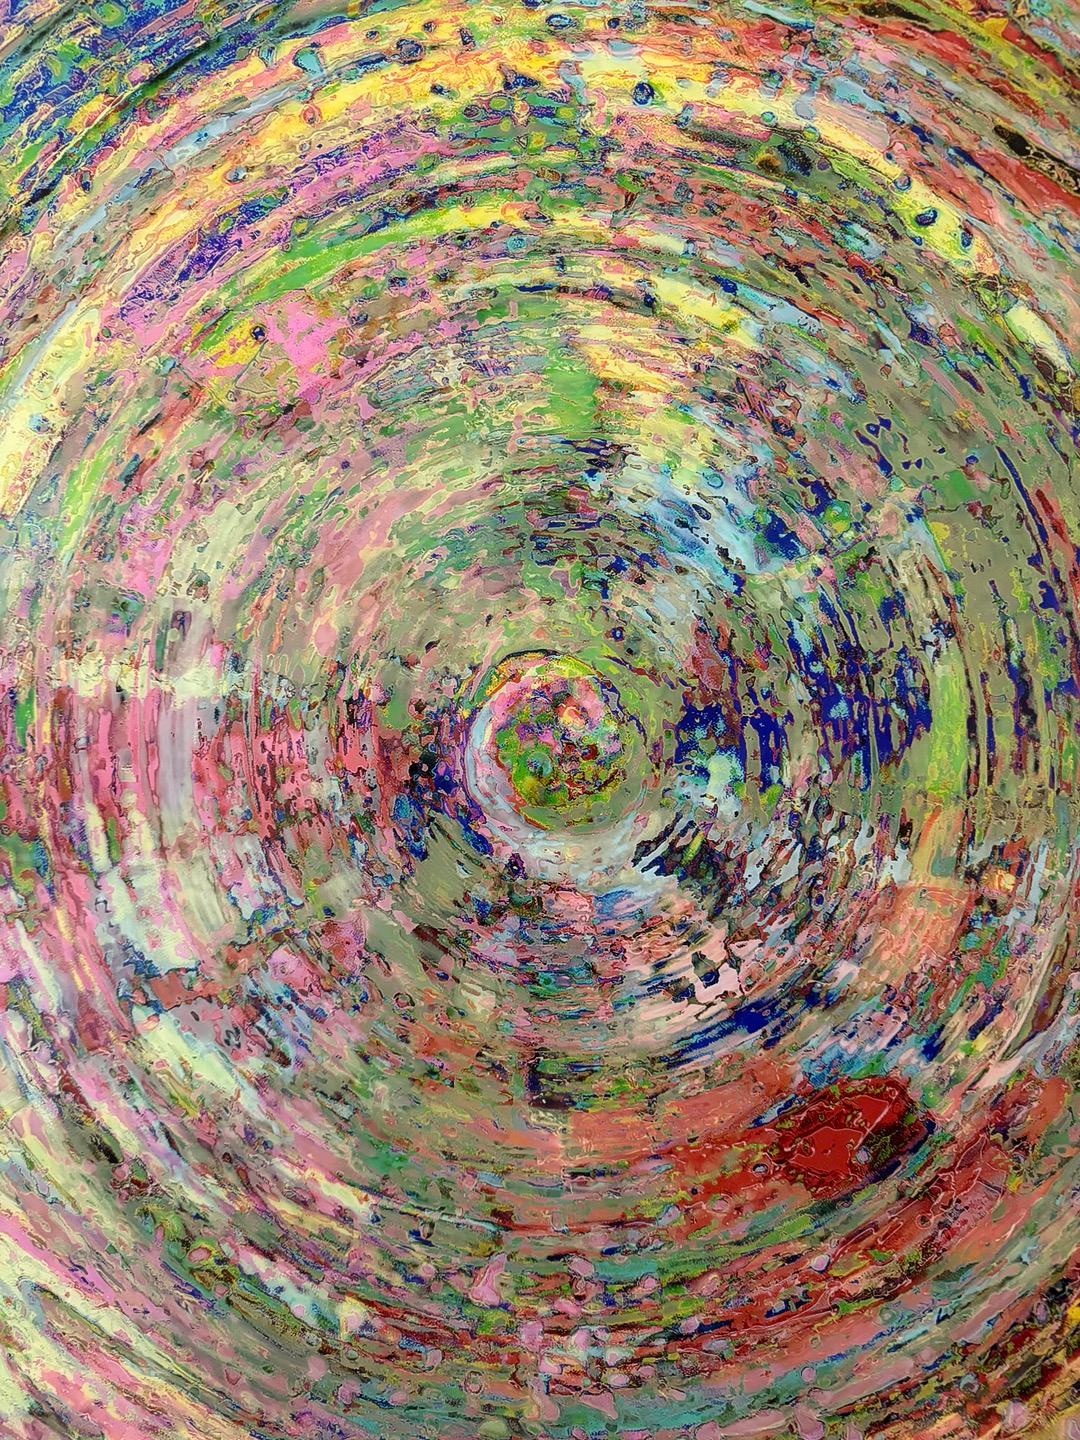 'Swirl Zero One' Digital Painting, Lambda Print Mounted on Alu Dibond - Gray Abstract Painting by Jens-Christian Wittig